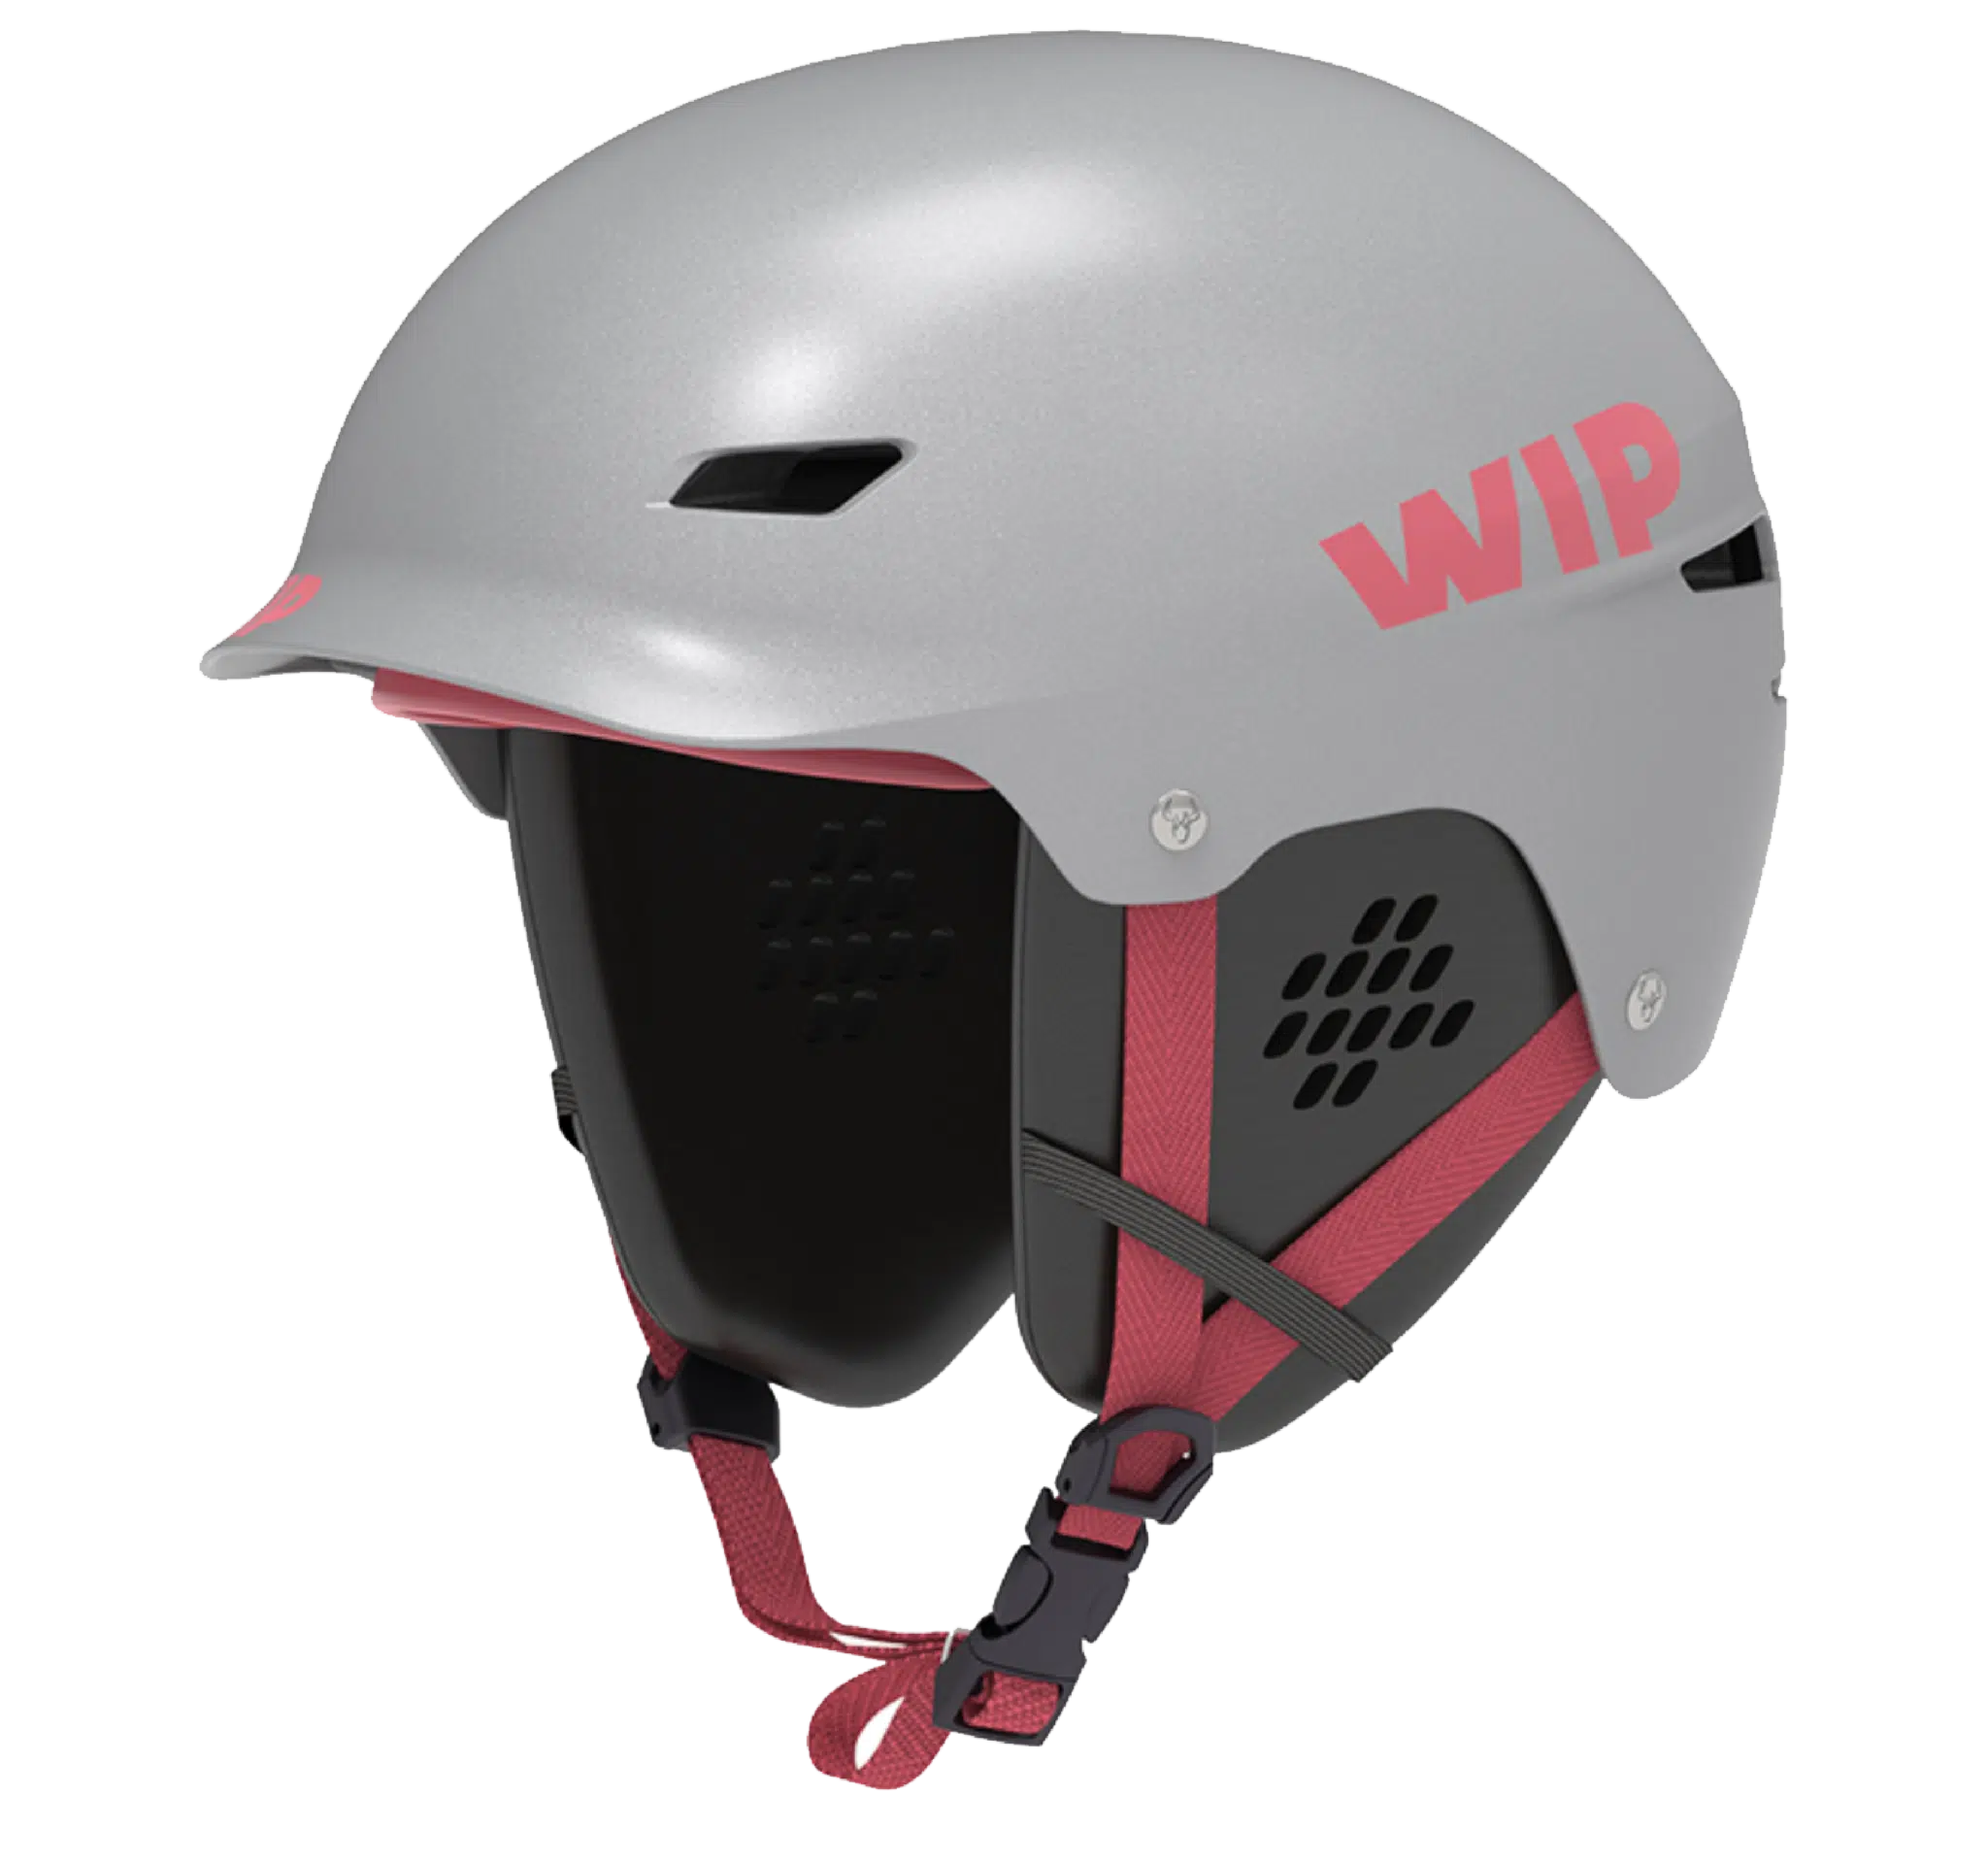 Forward WIP Wipper 2.0